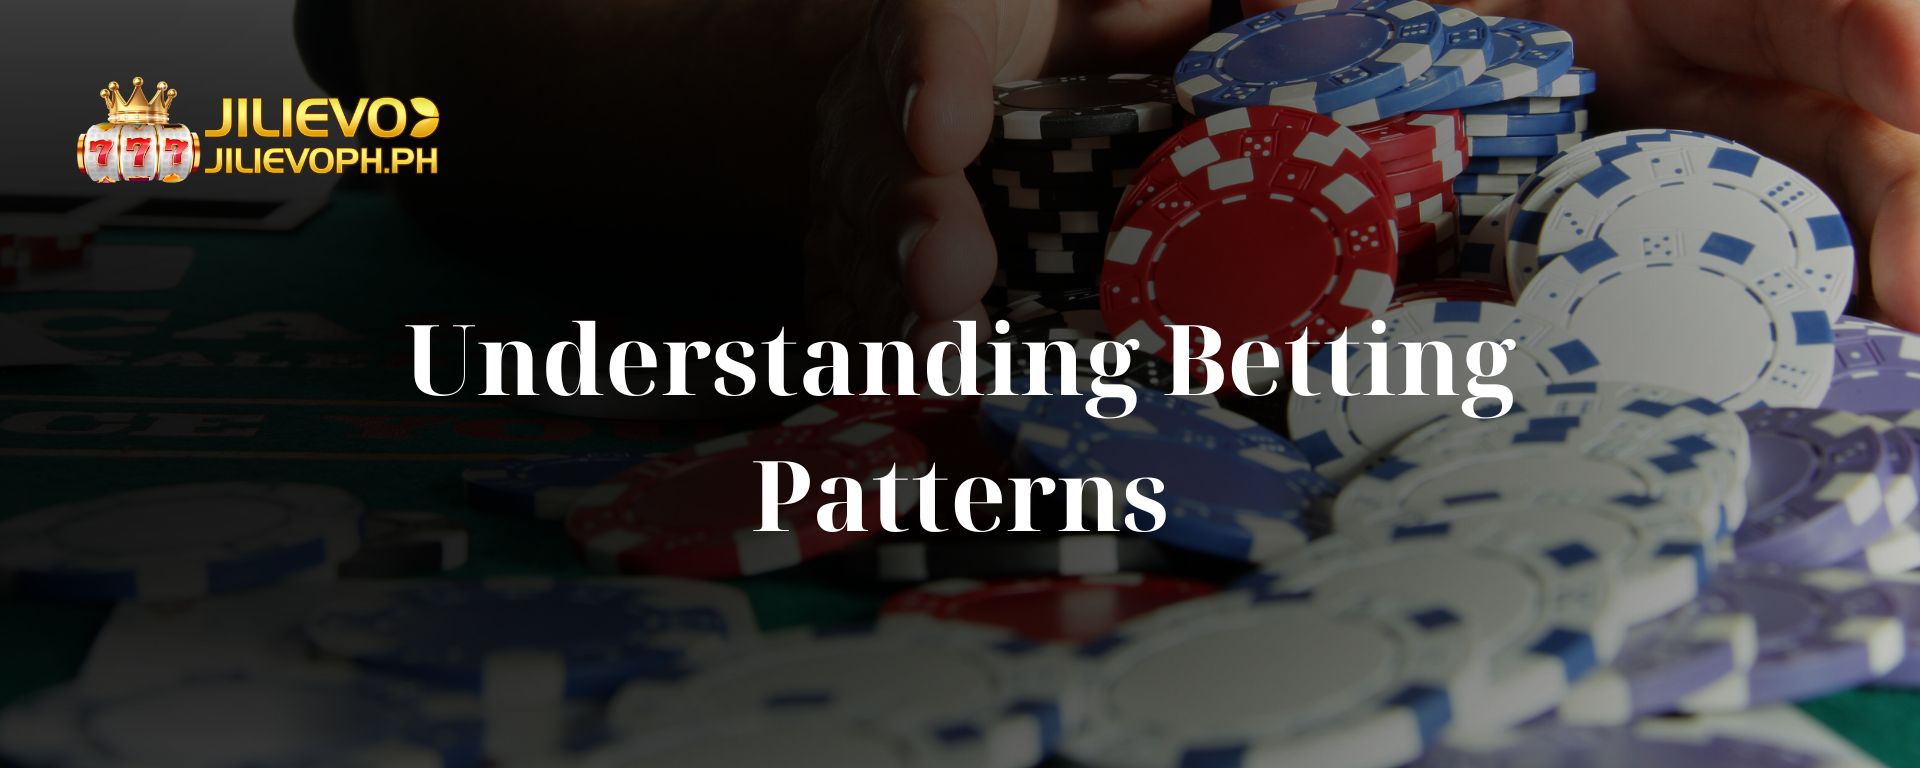 Understanding Betting Patterns